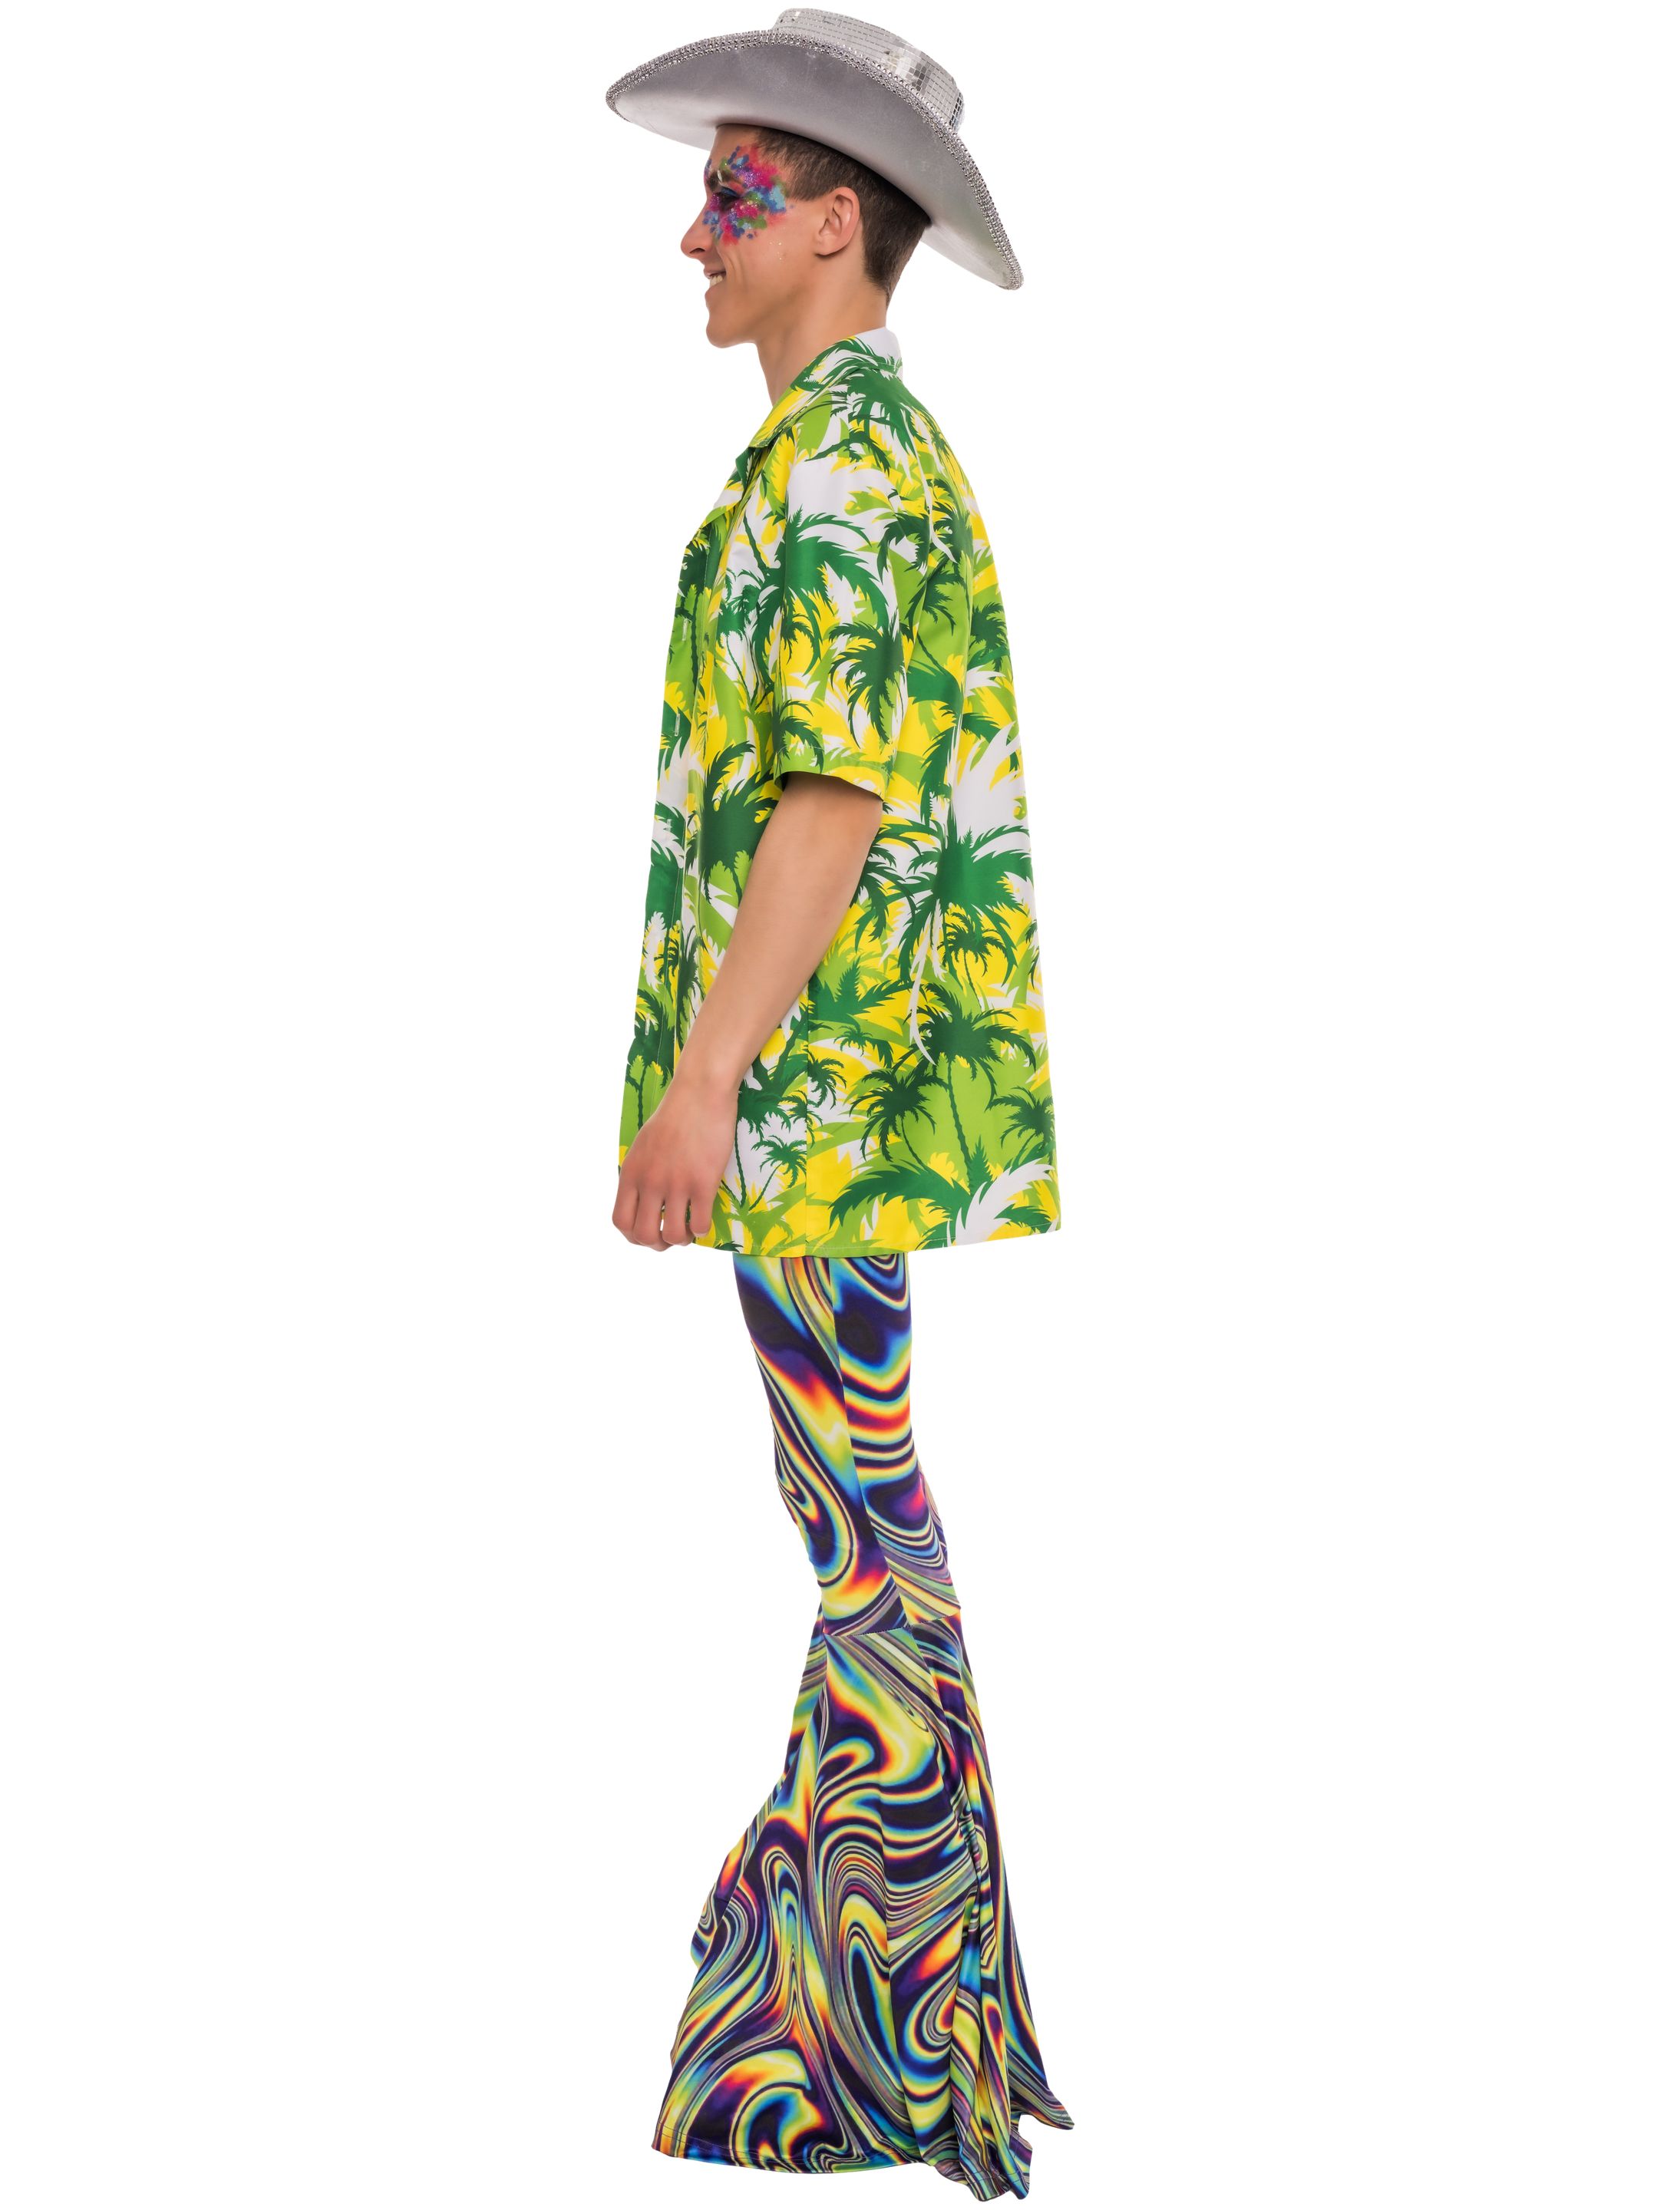 Hawaiihemd Herren Herren grün 3XL